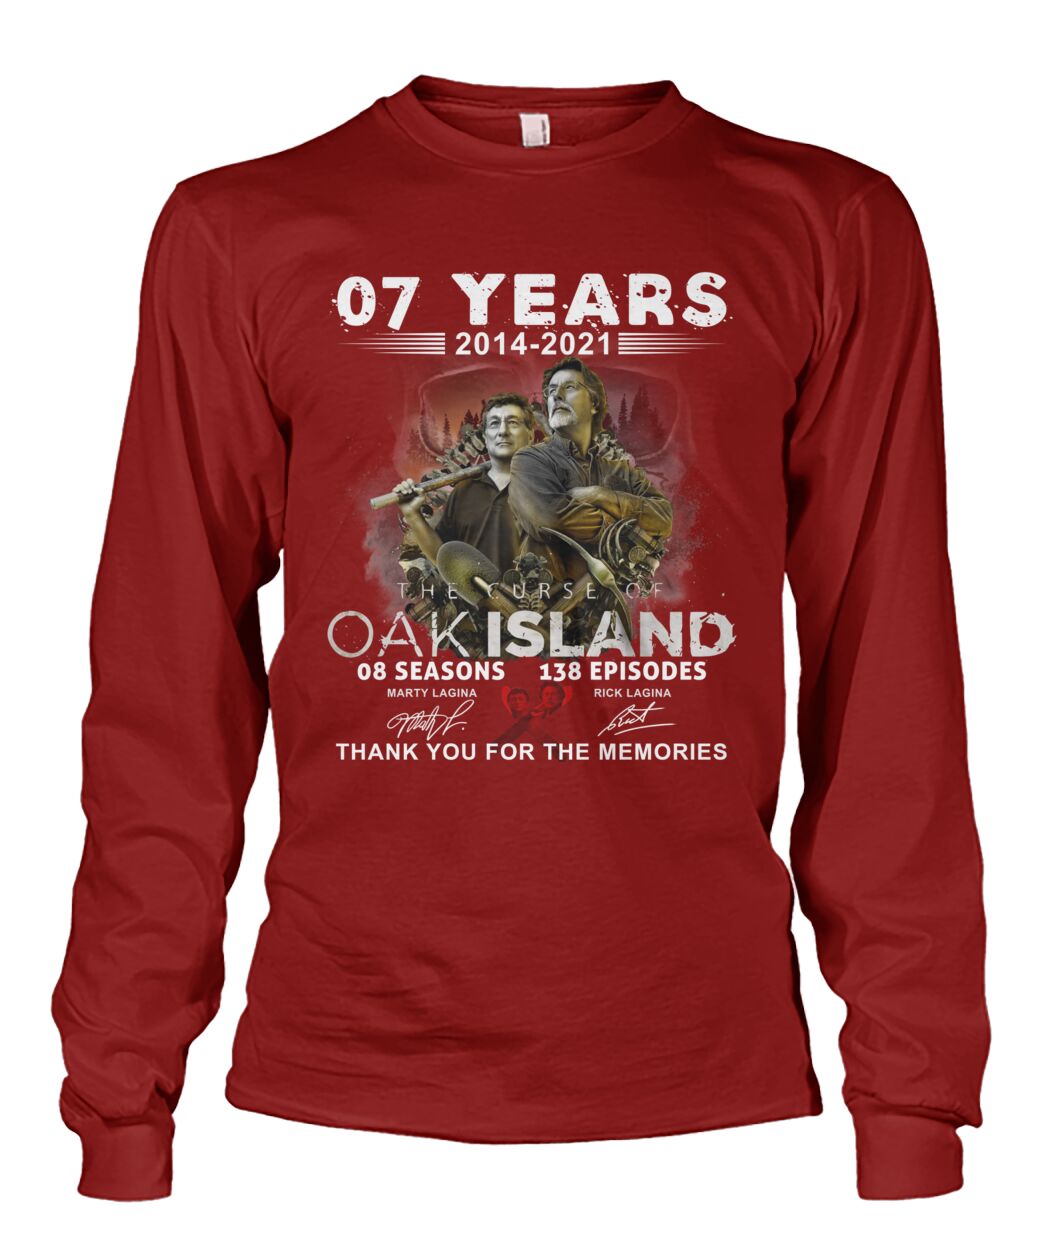 07 years 2014 2021 OAK island 08 seasons thank you for memories shirt 12